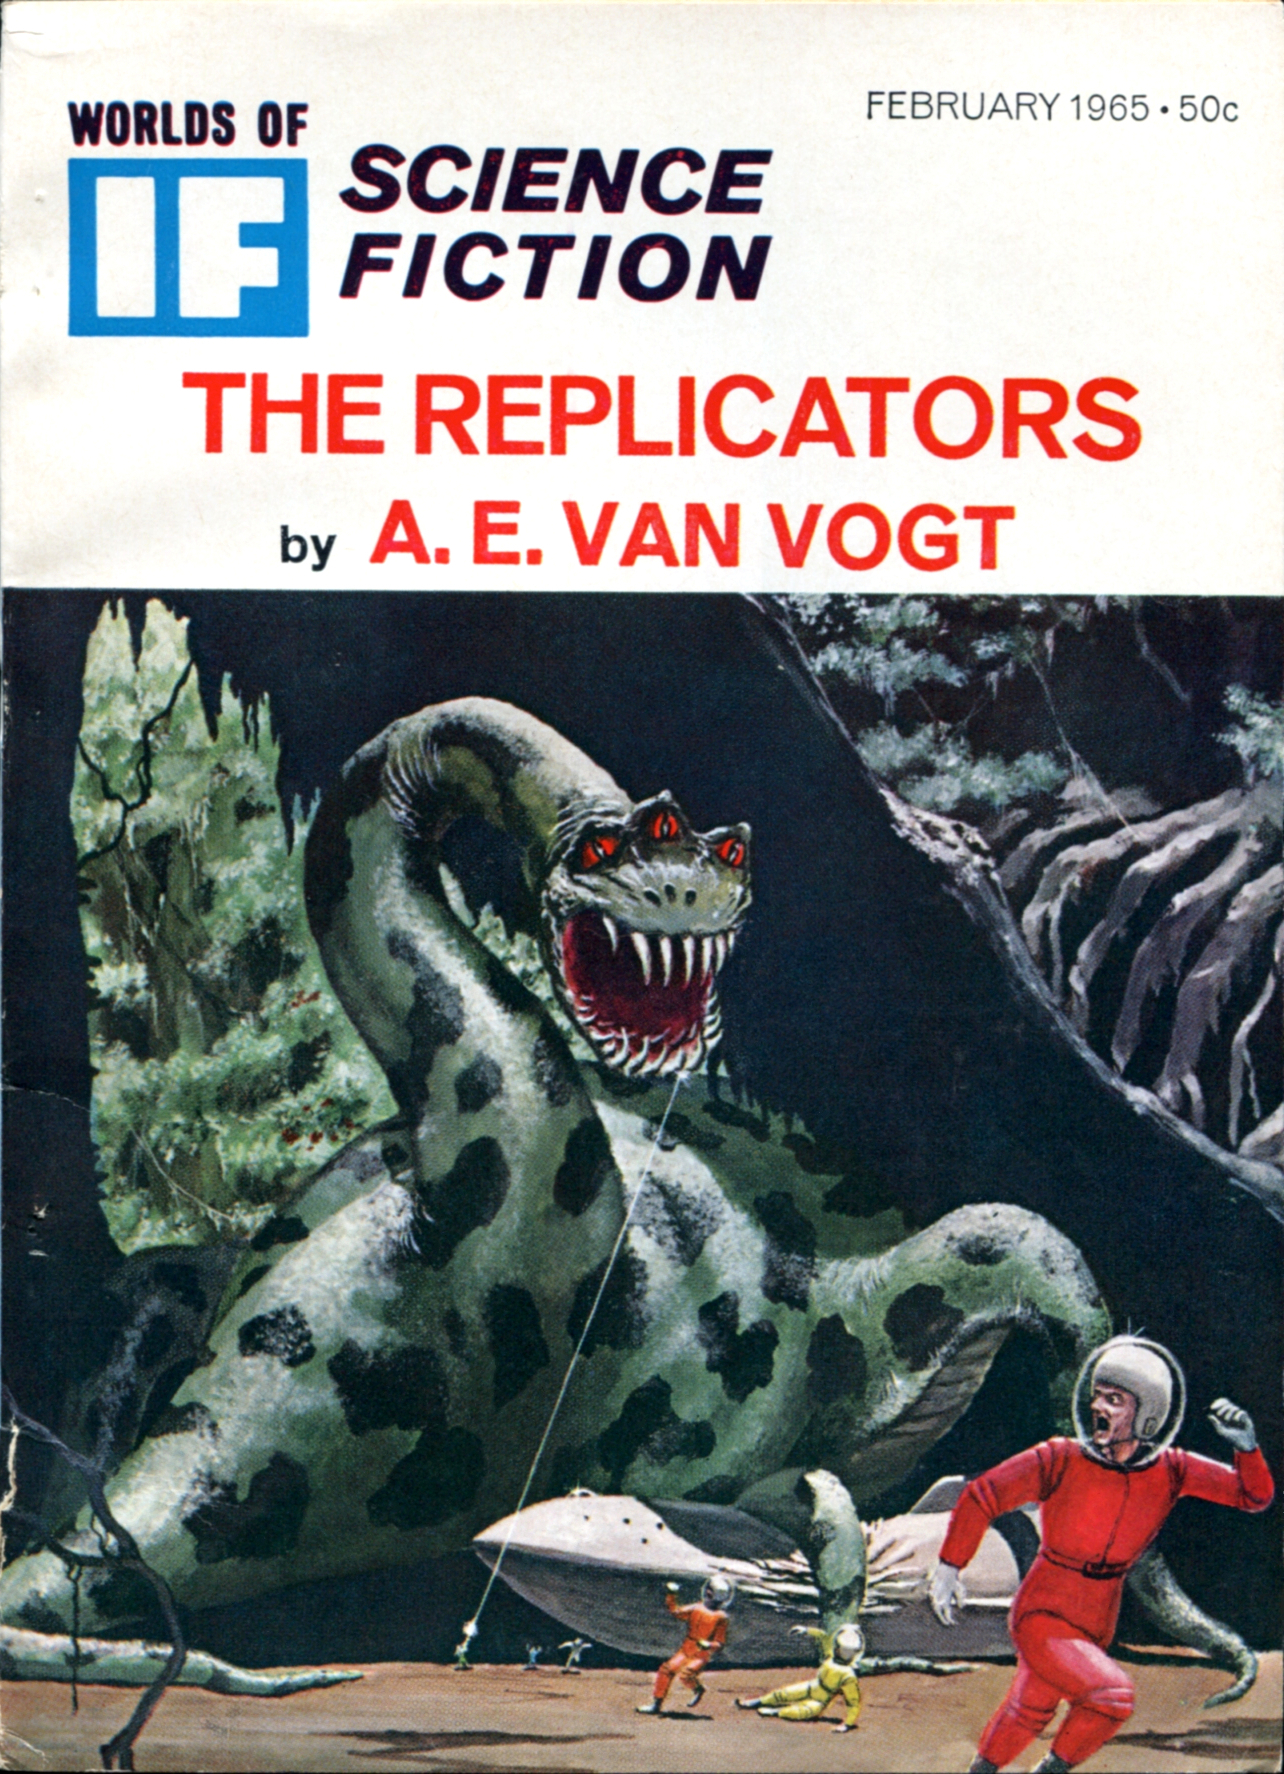 Science Fiction, The Replicators by A.E.Van Voght